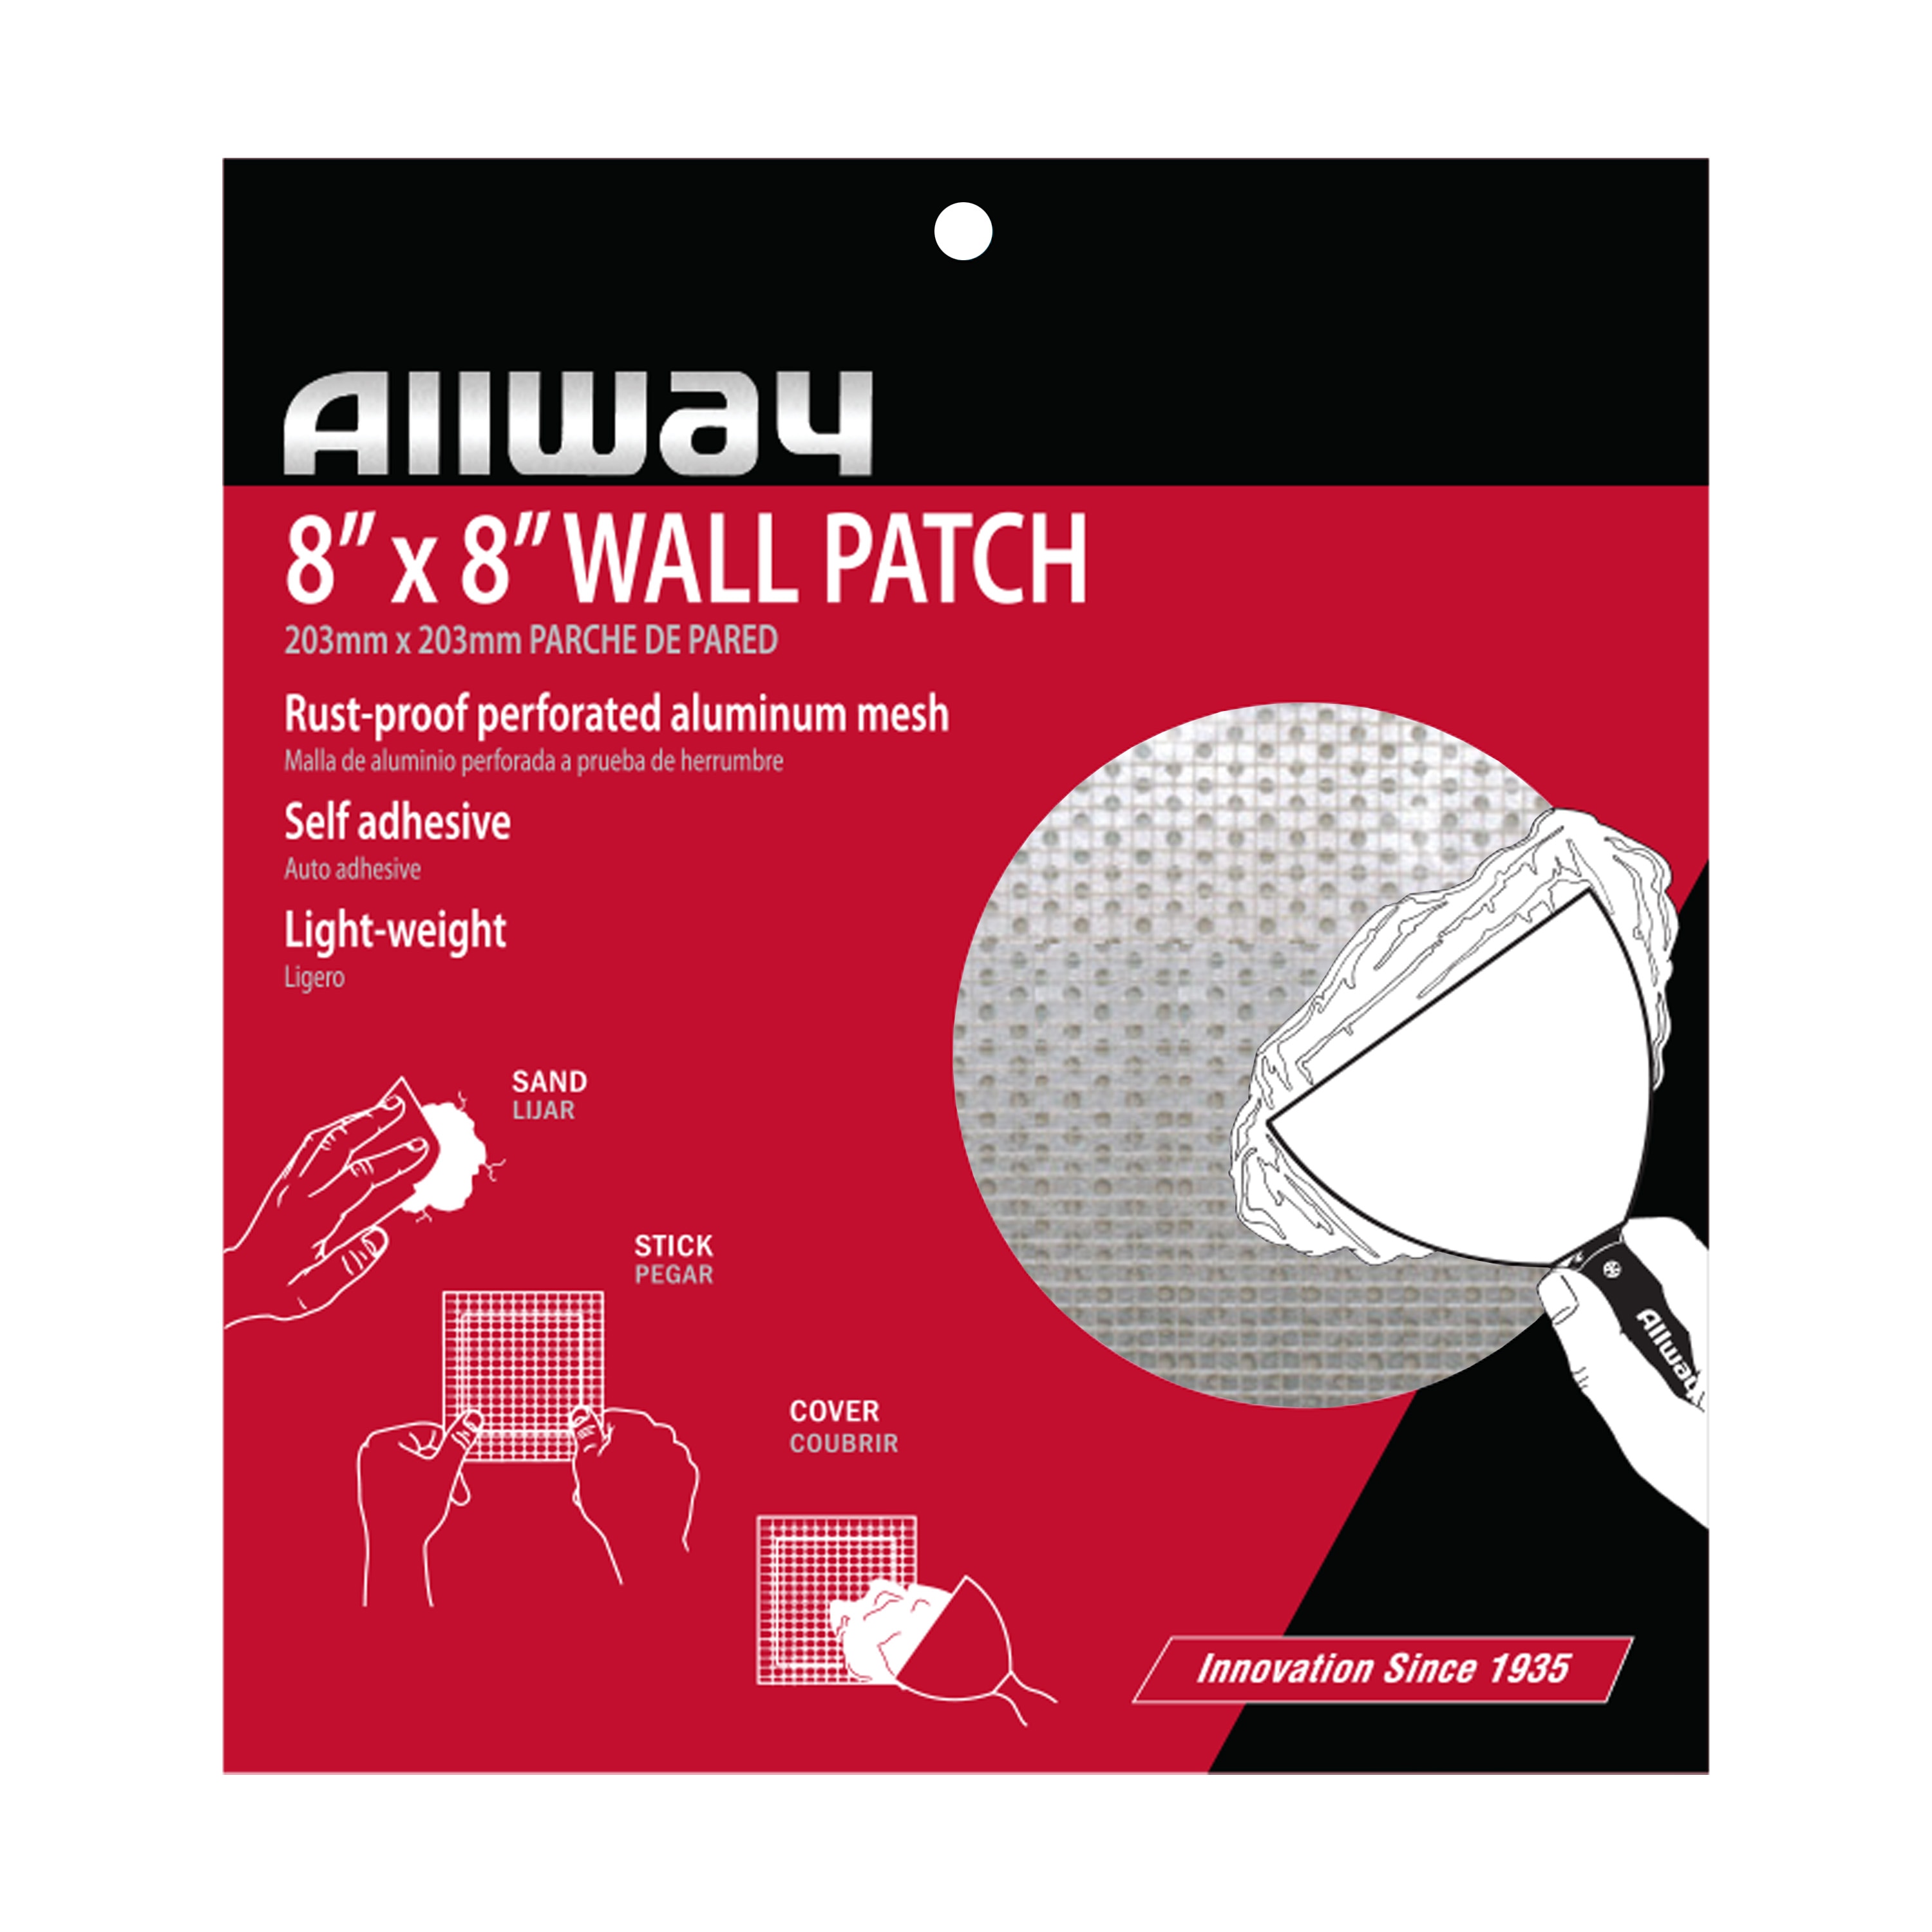 Drywall Repair Kit, 8 Pack 4/6/8 inch Wall Patch Repair Kit, Aluminum Wall Repair Patches Self Adhesive, Dry Wall Hole Repair Patch for Ceilings